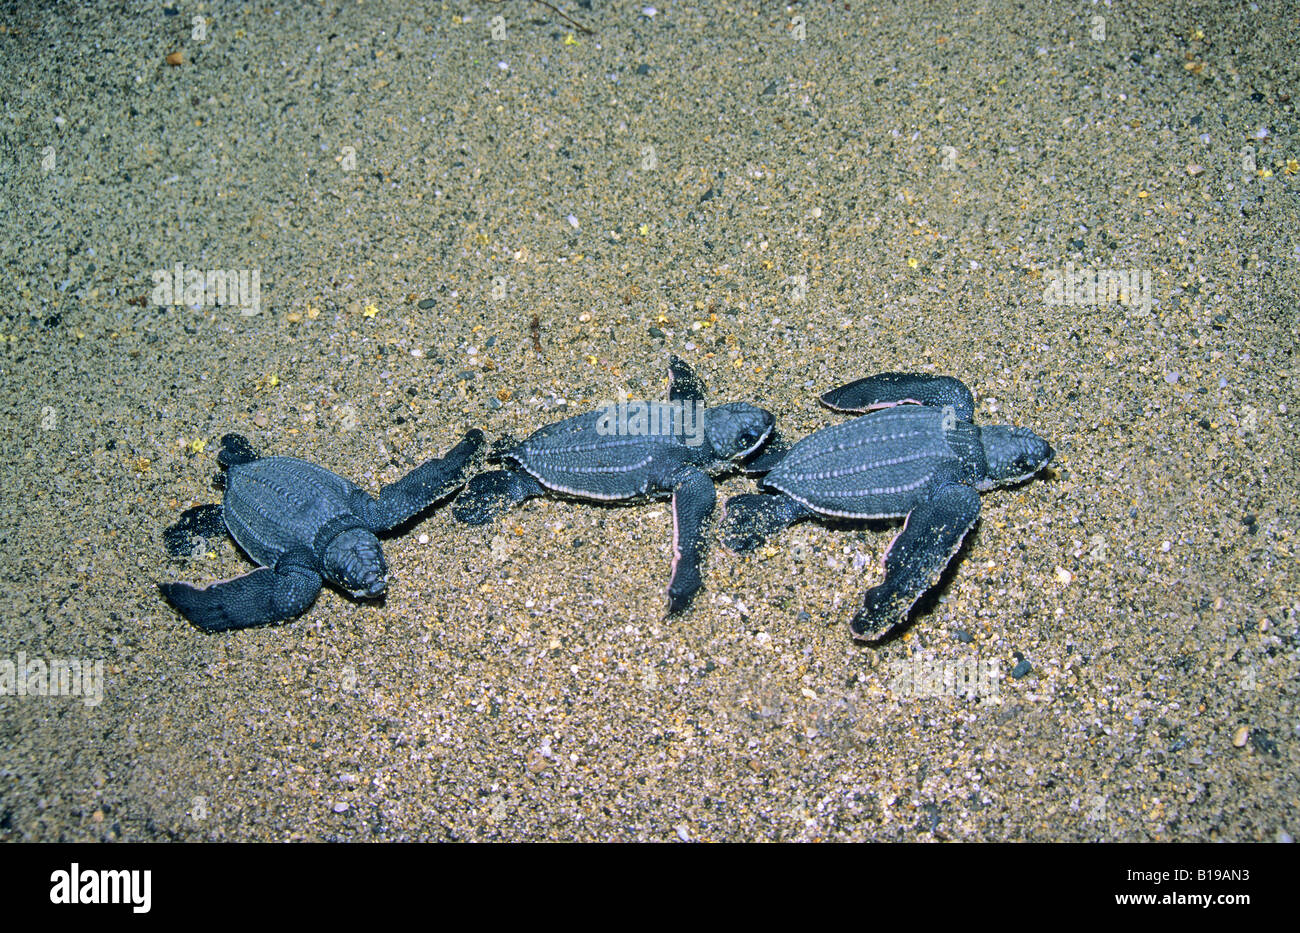 Newborn hatchling sea turtles (Dermochelys coriacea) searching for the ocean, Trinidad. Stock Photo